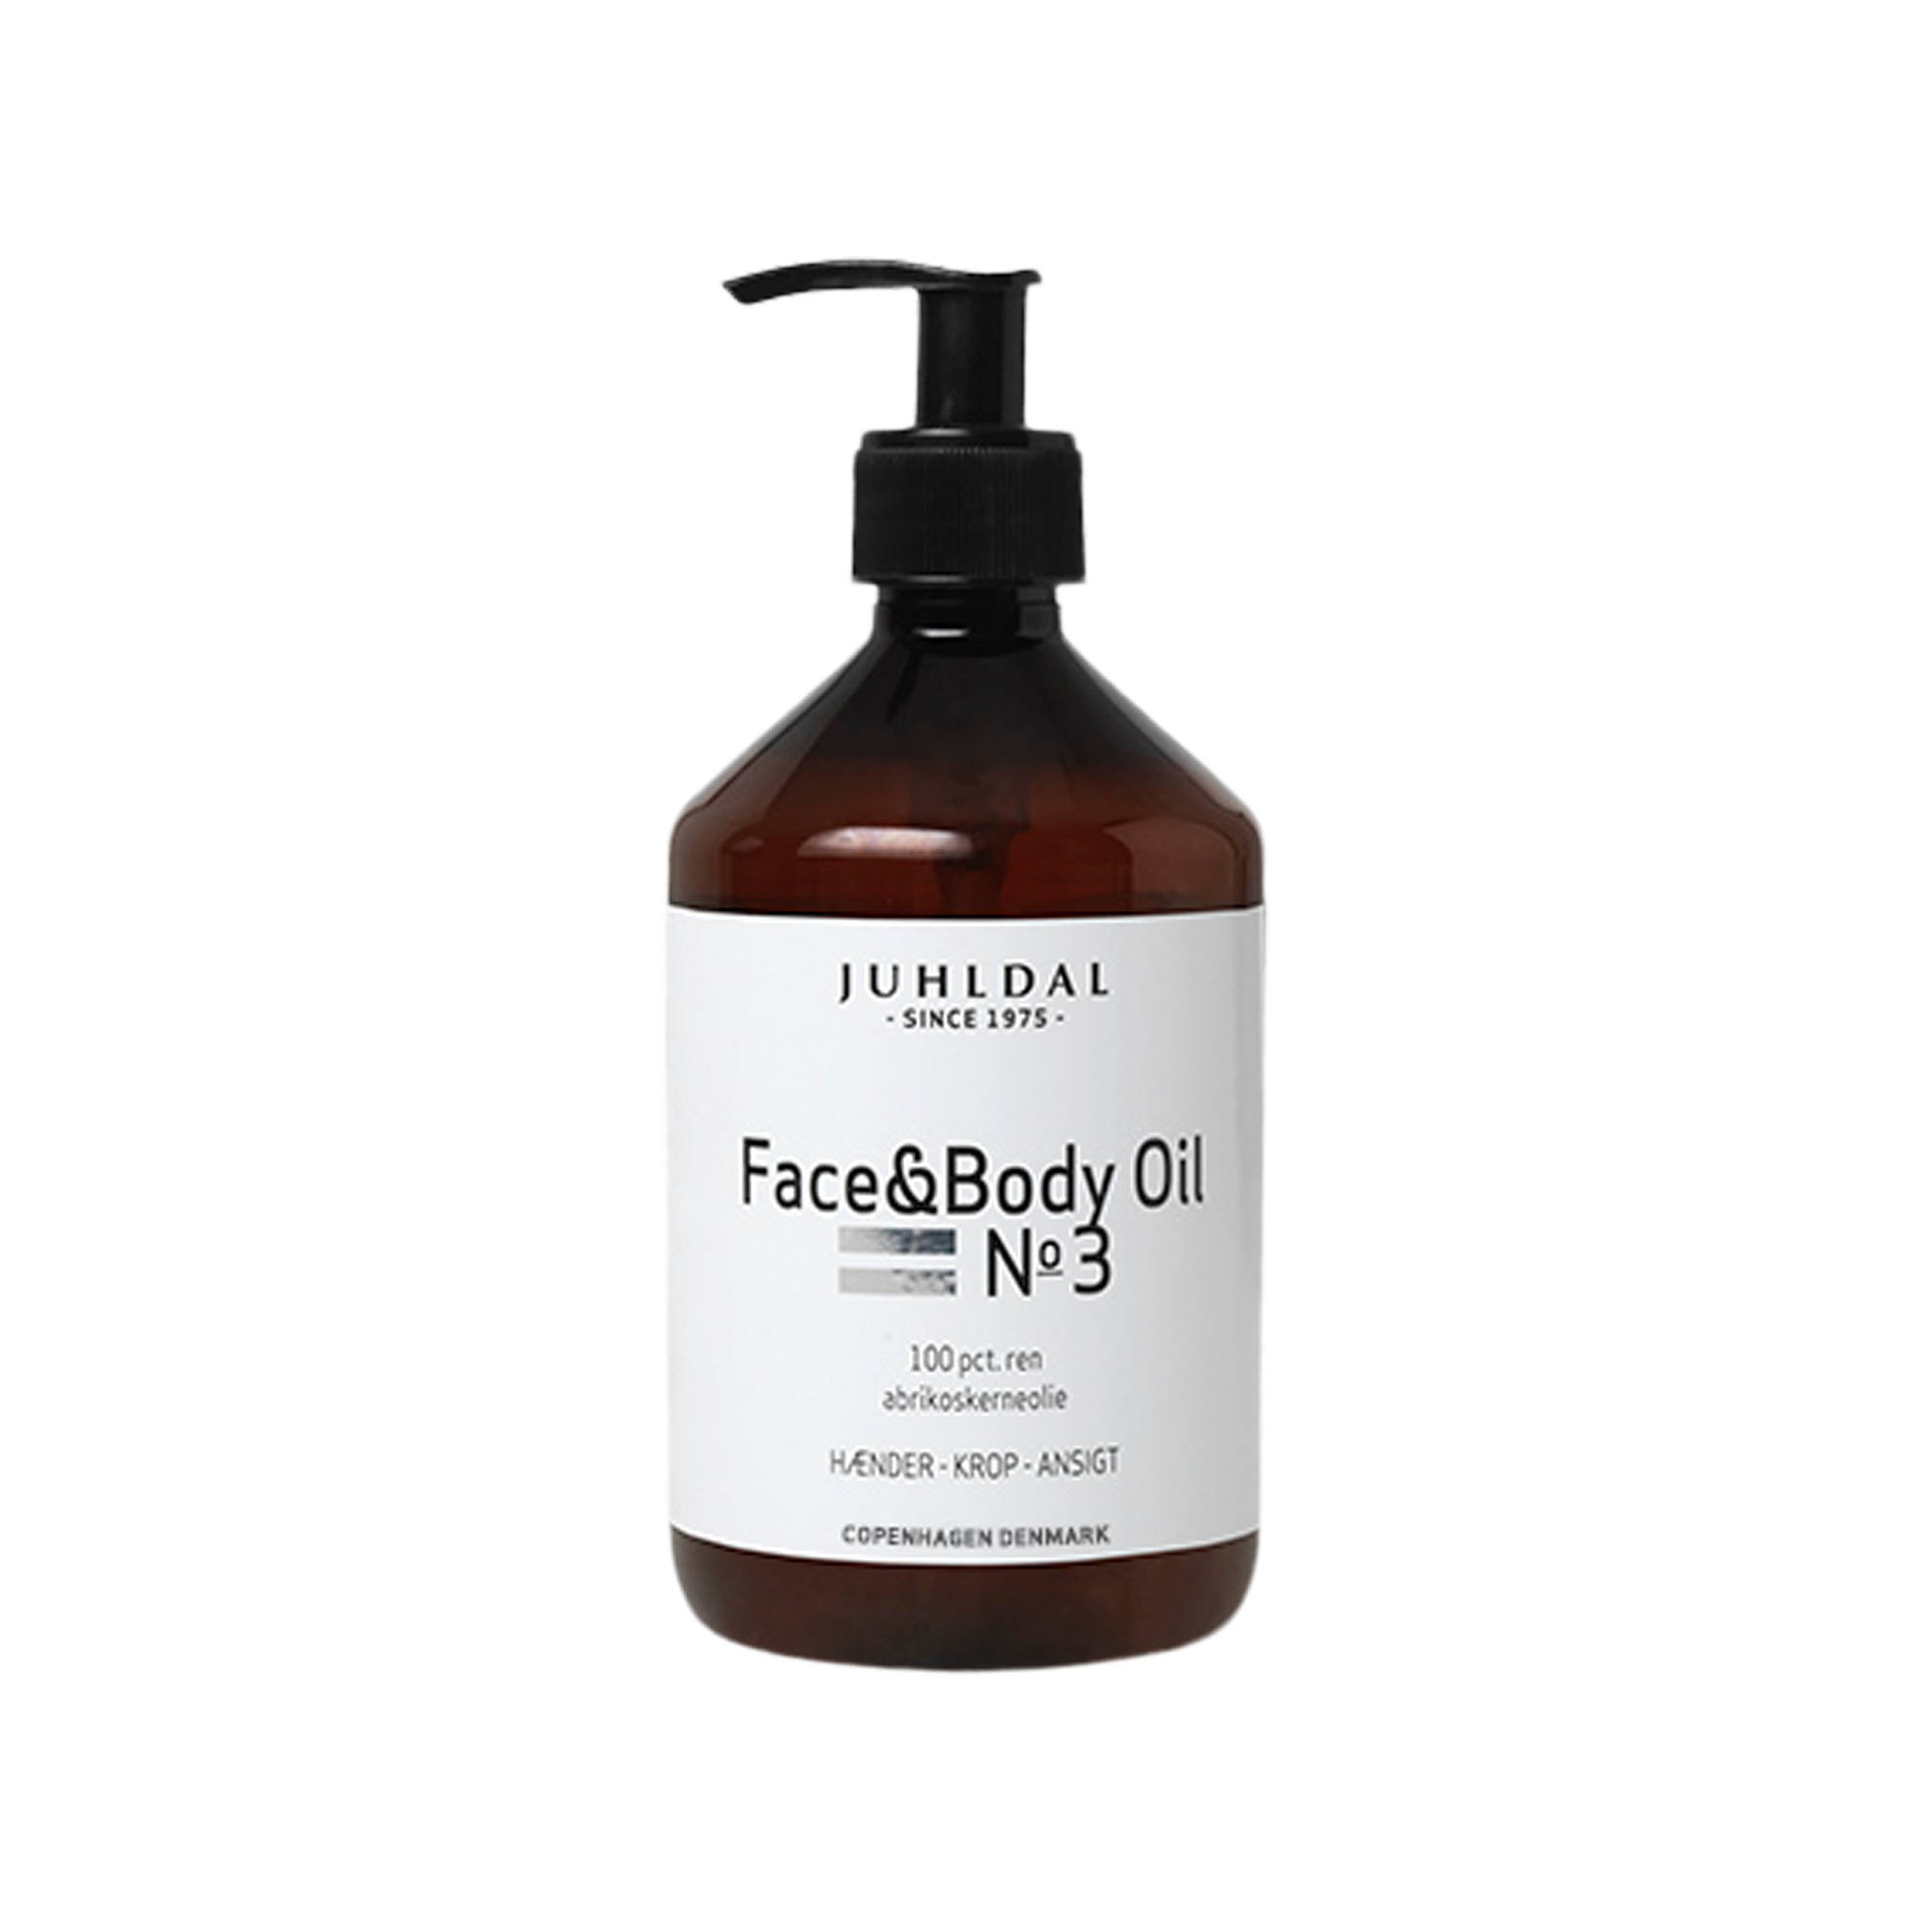 Juhldal Face & Body Oil NO 3